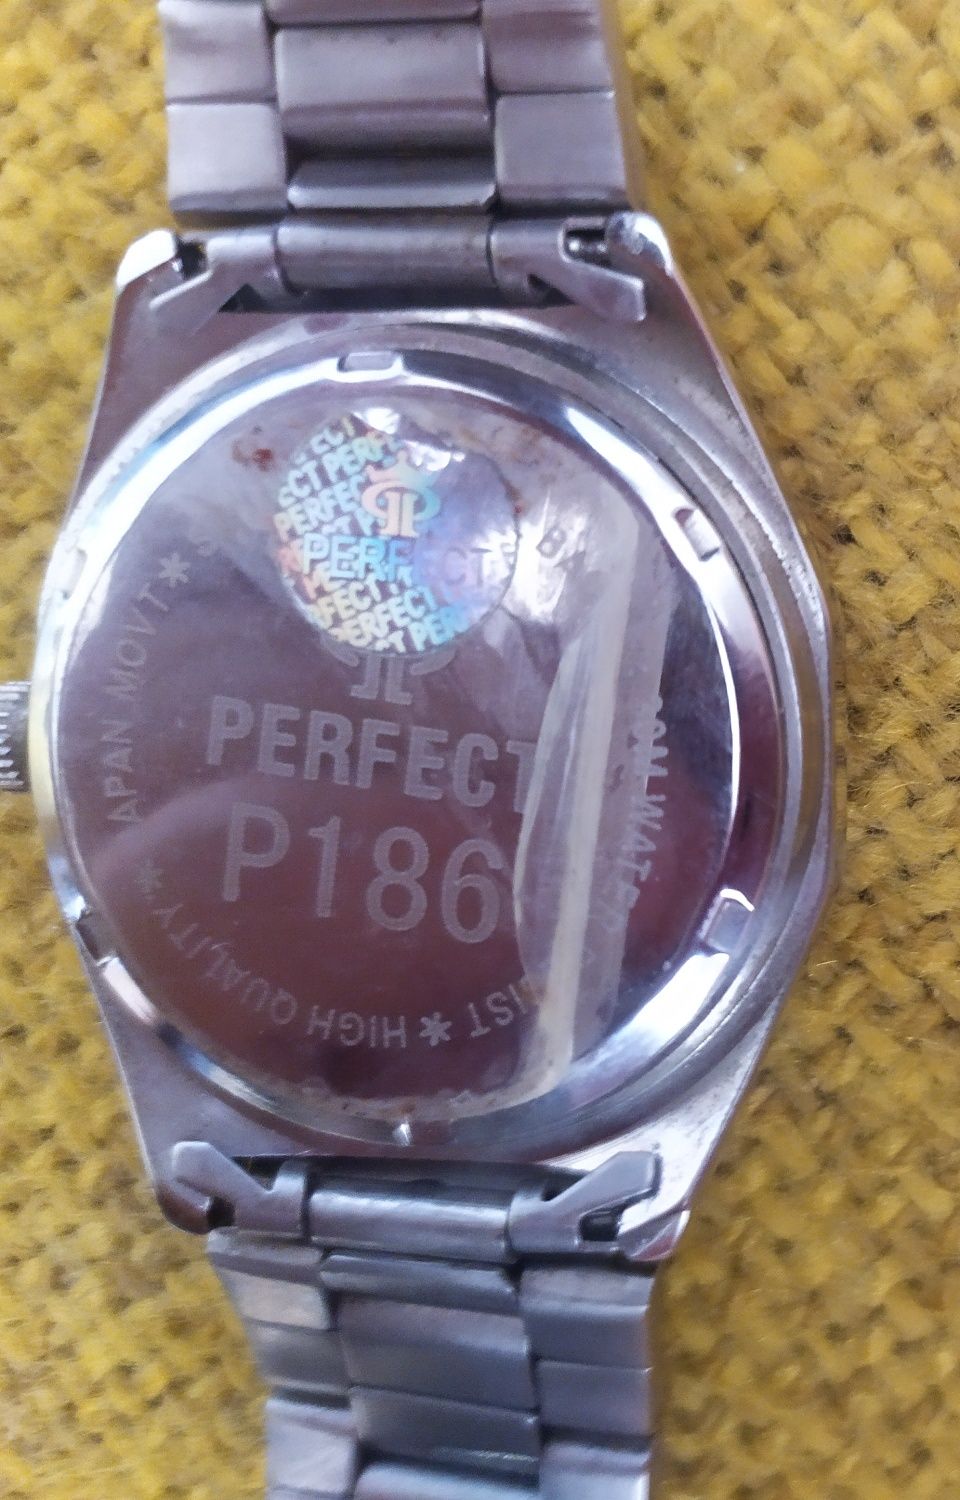 Zegarek nowy męski Perfect P186